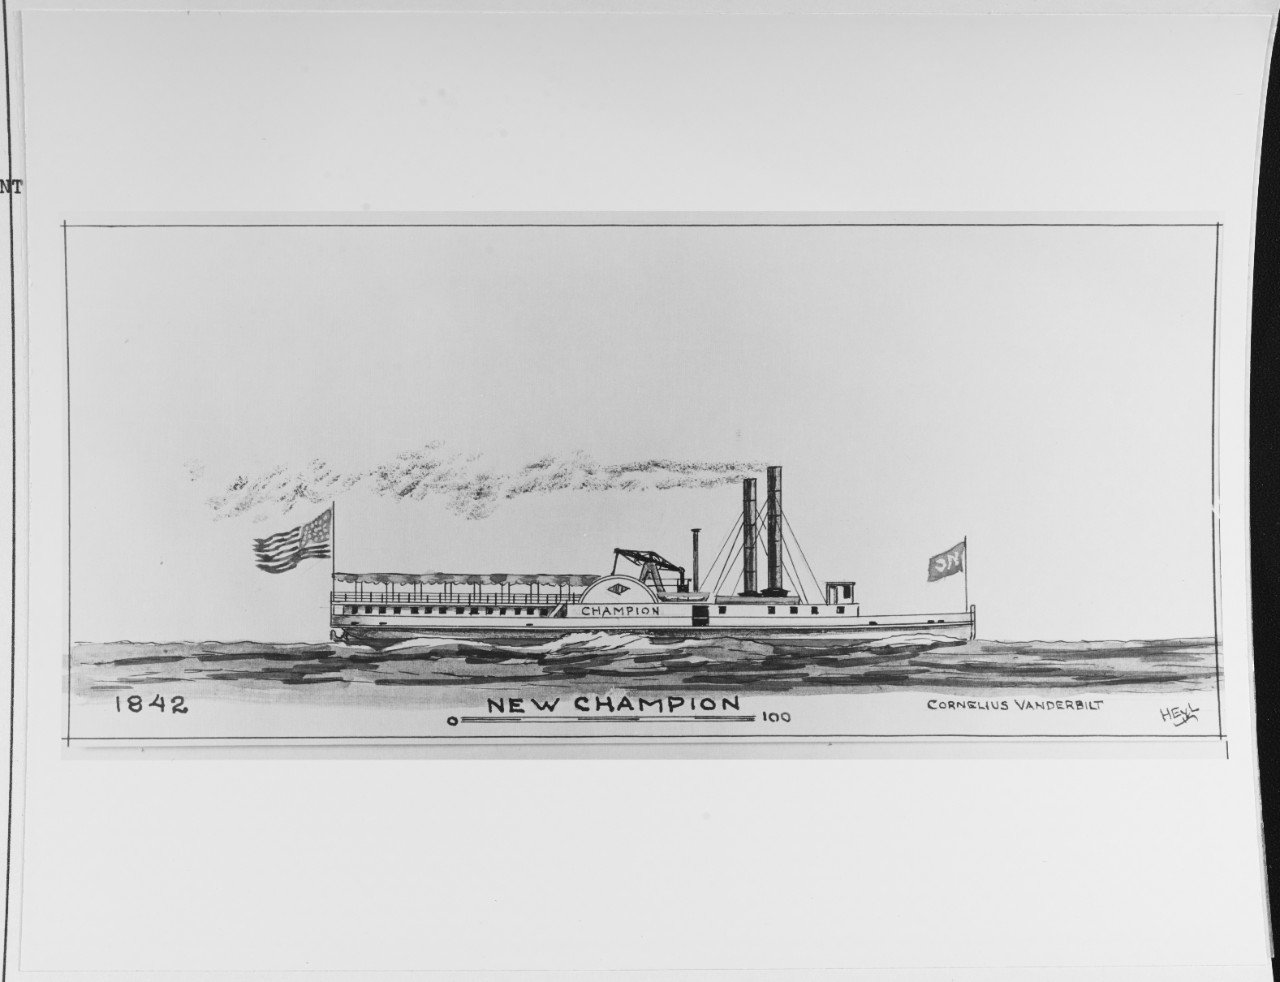 NEW CHAMPION (American merchant steamer, 1842-1887)